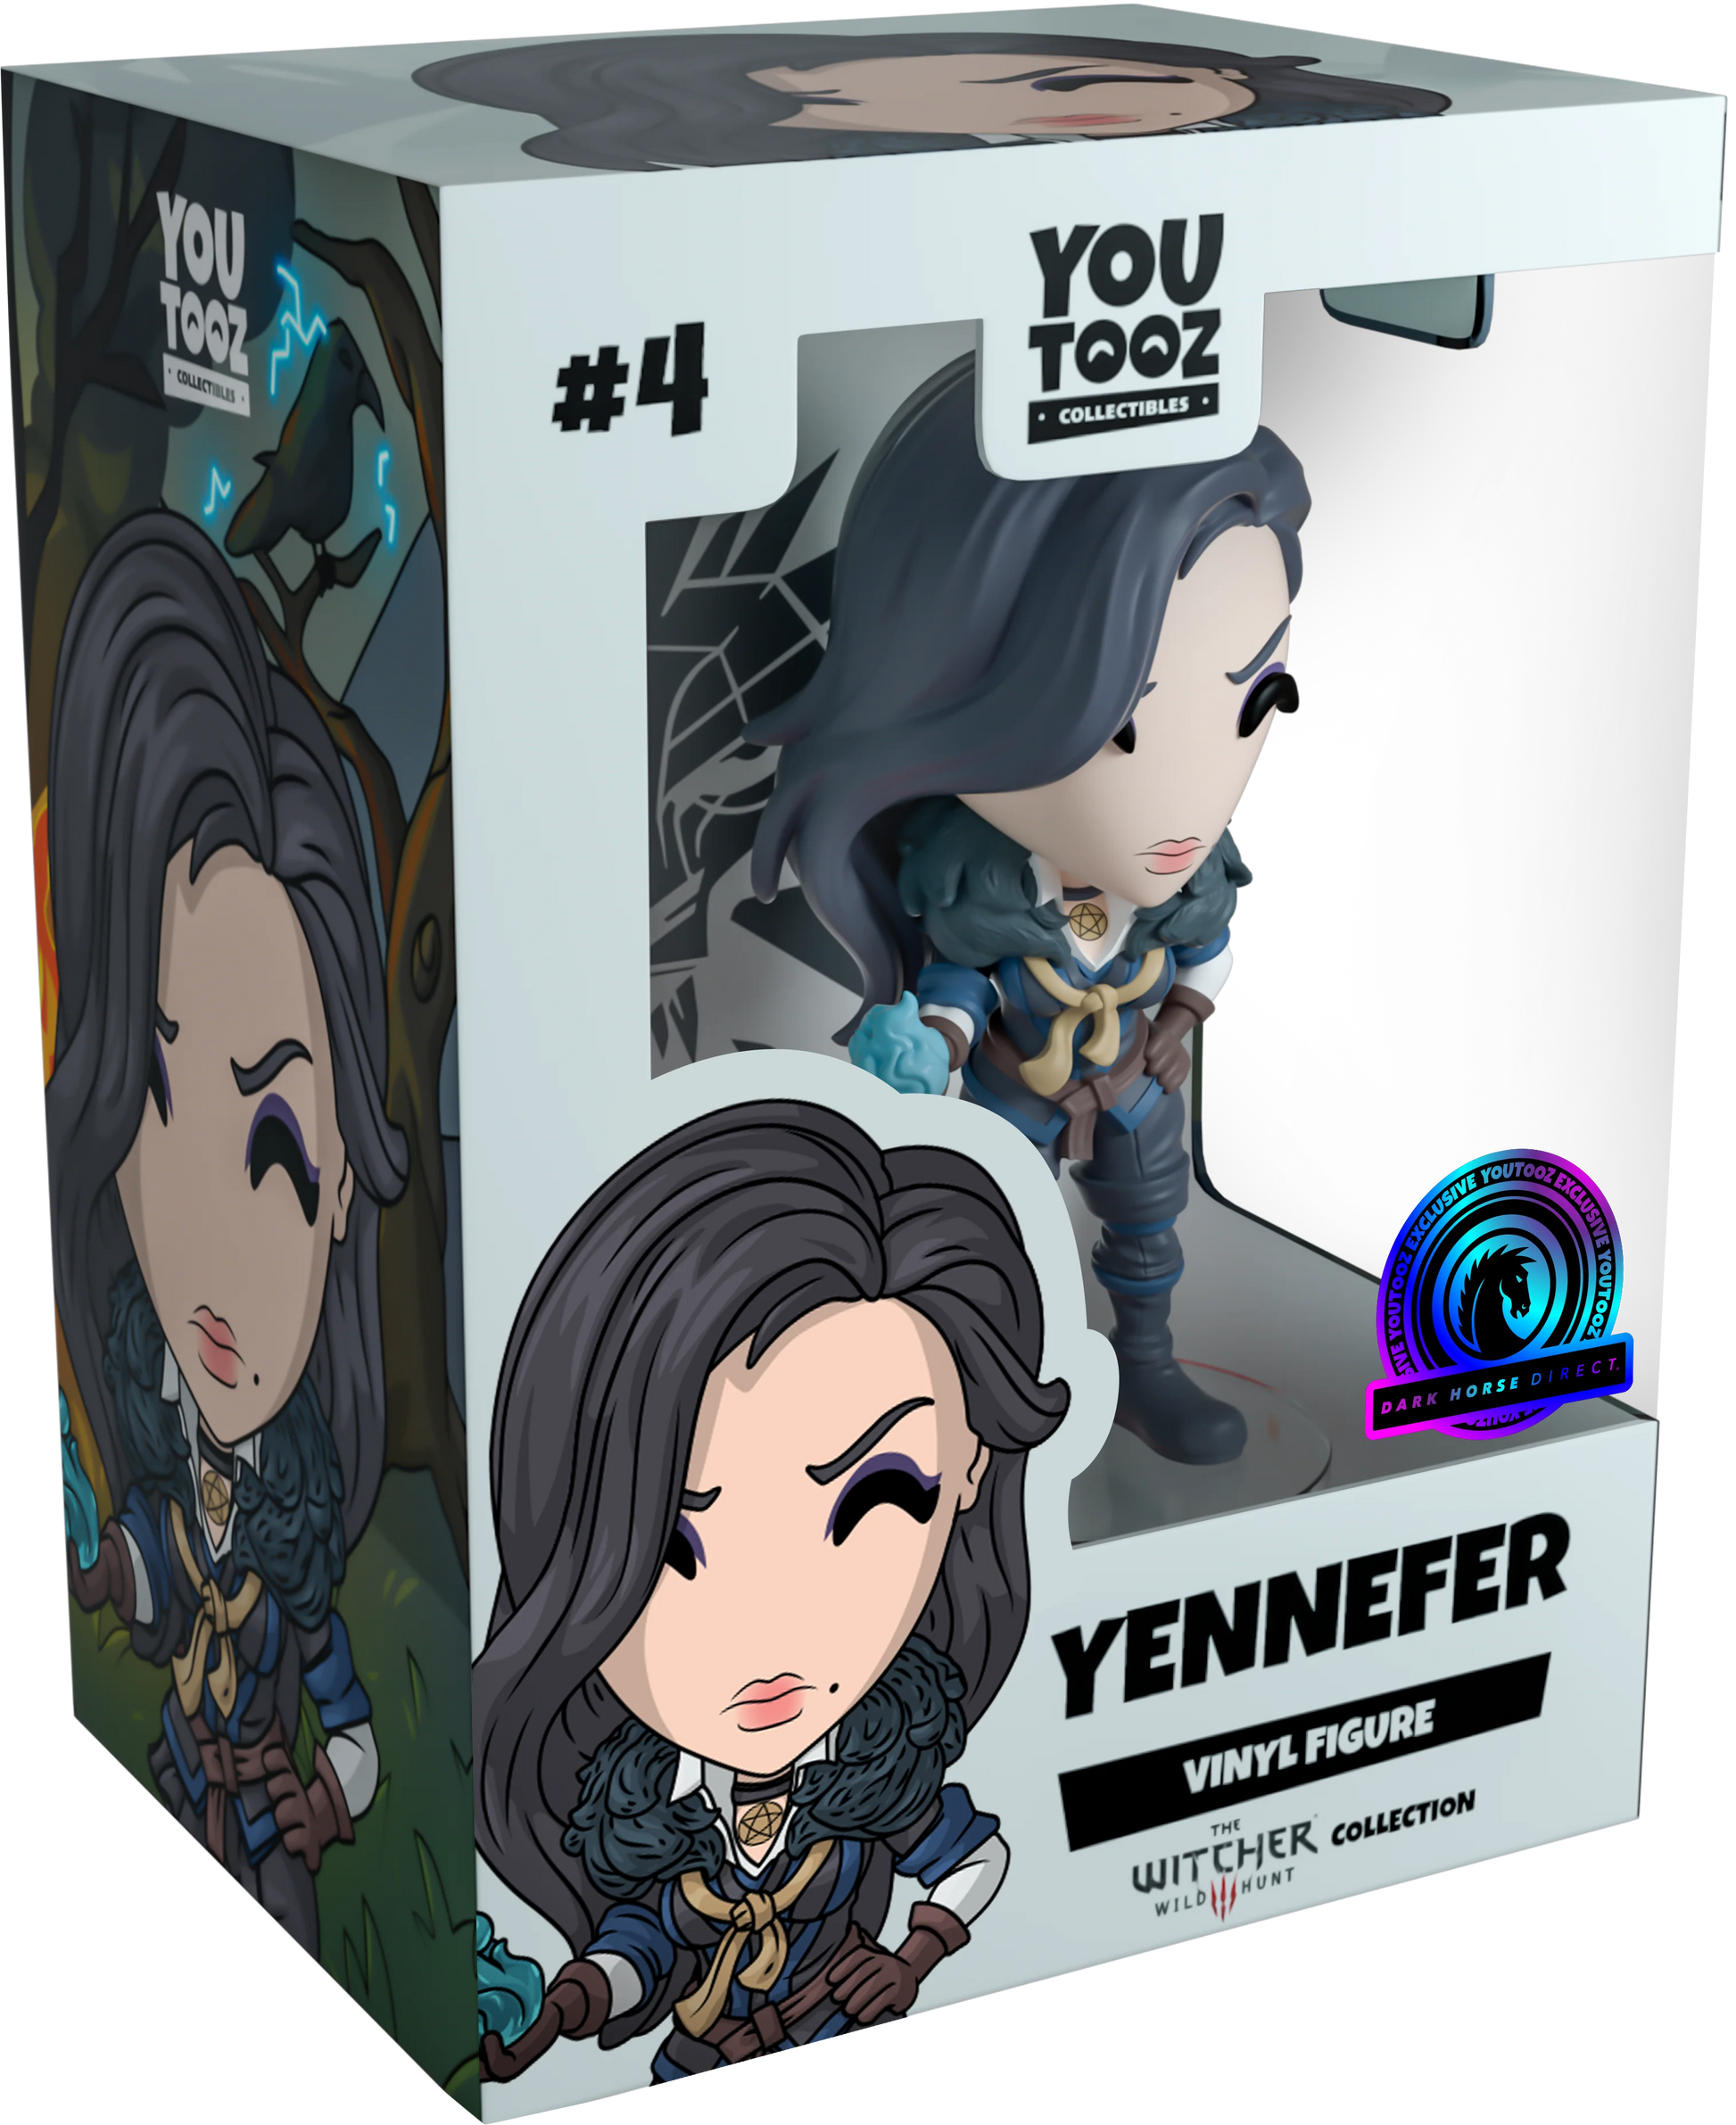 The Witcher Vinyl figurine Yennefer Youtooz Neflix